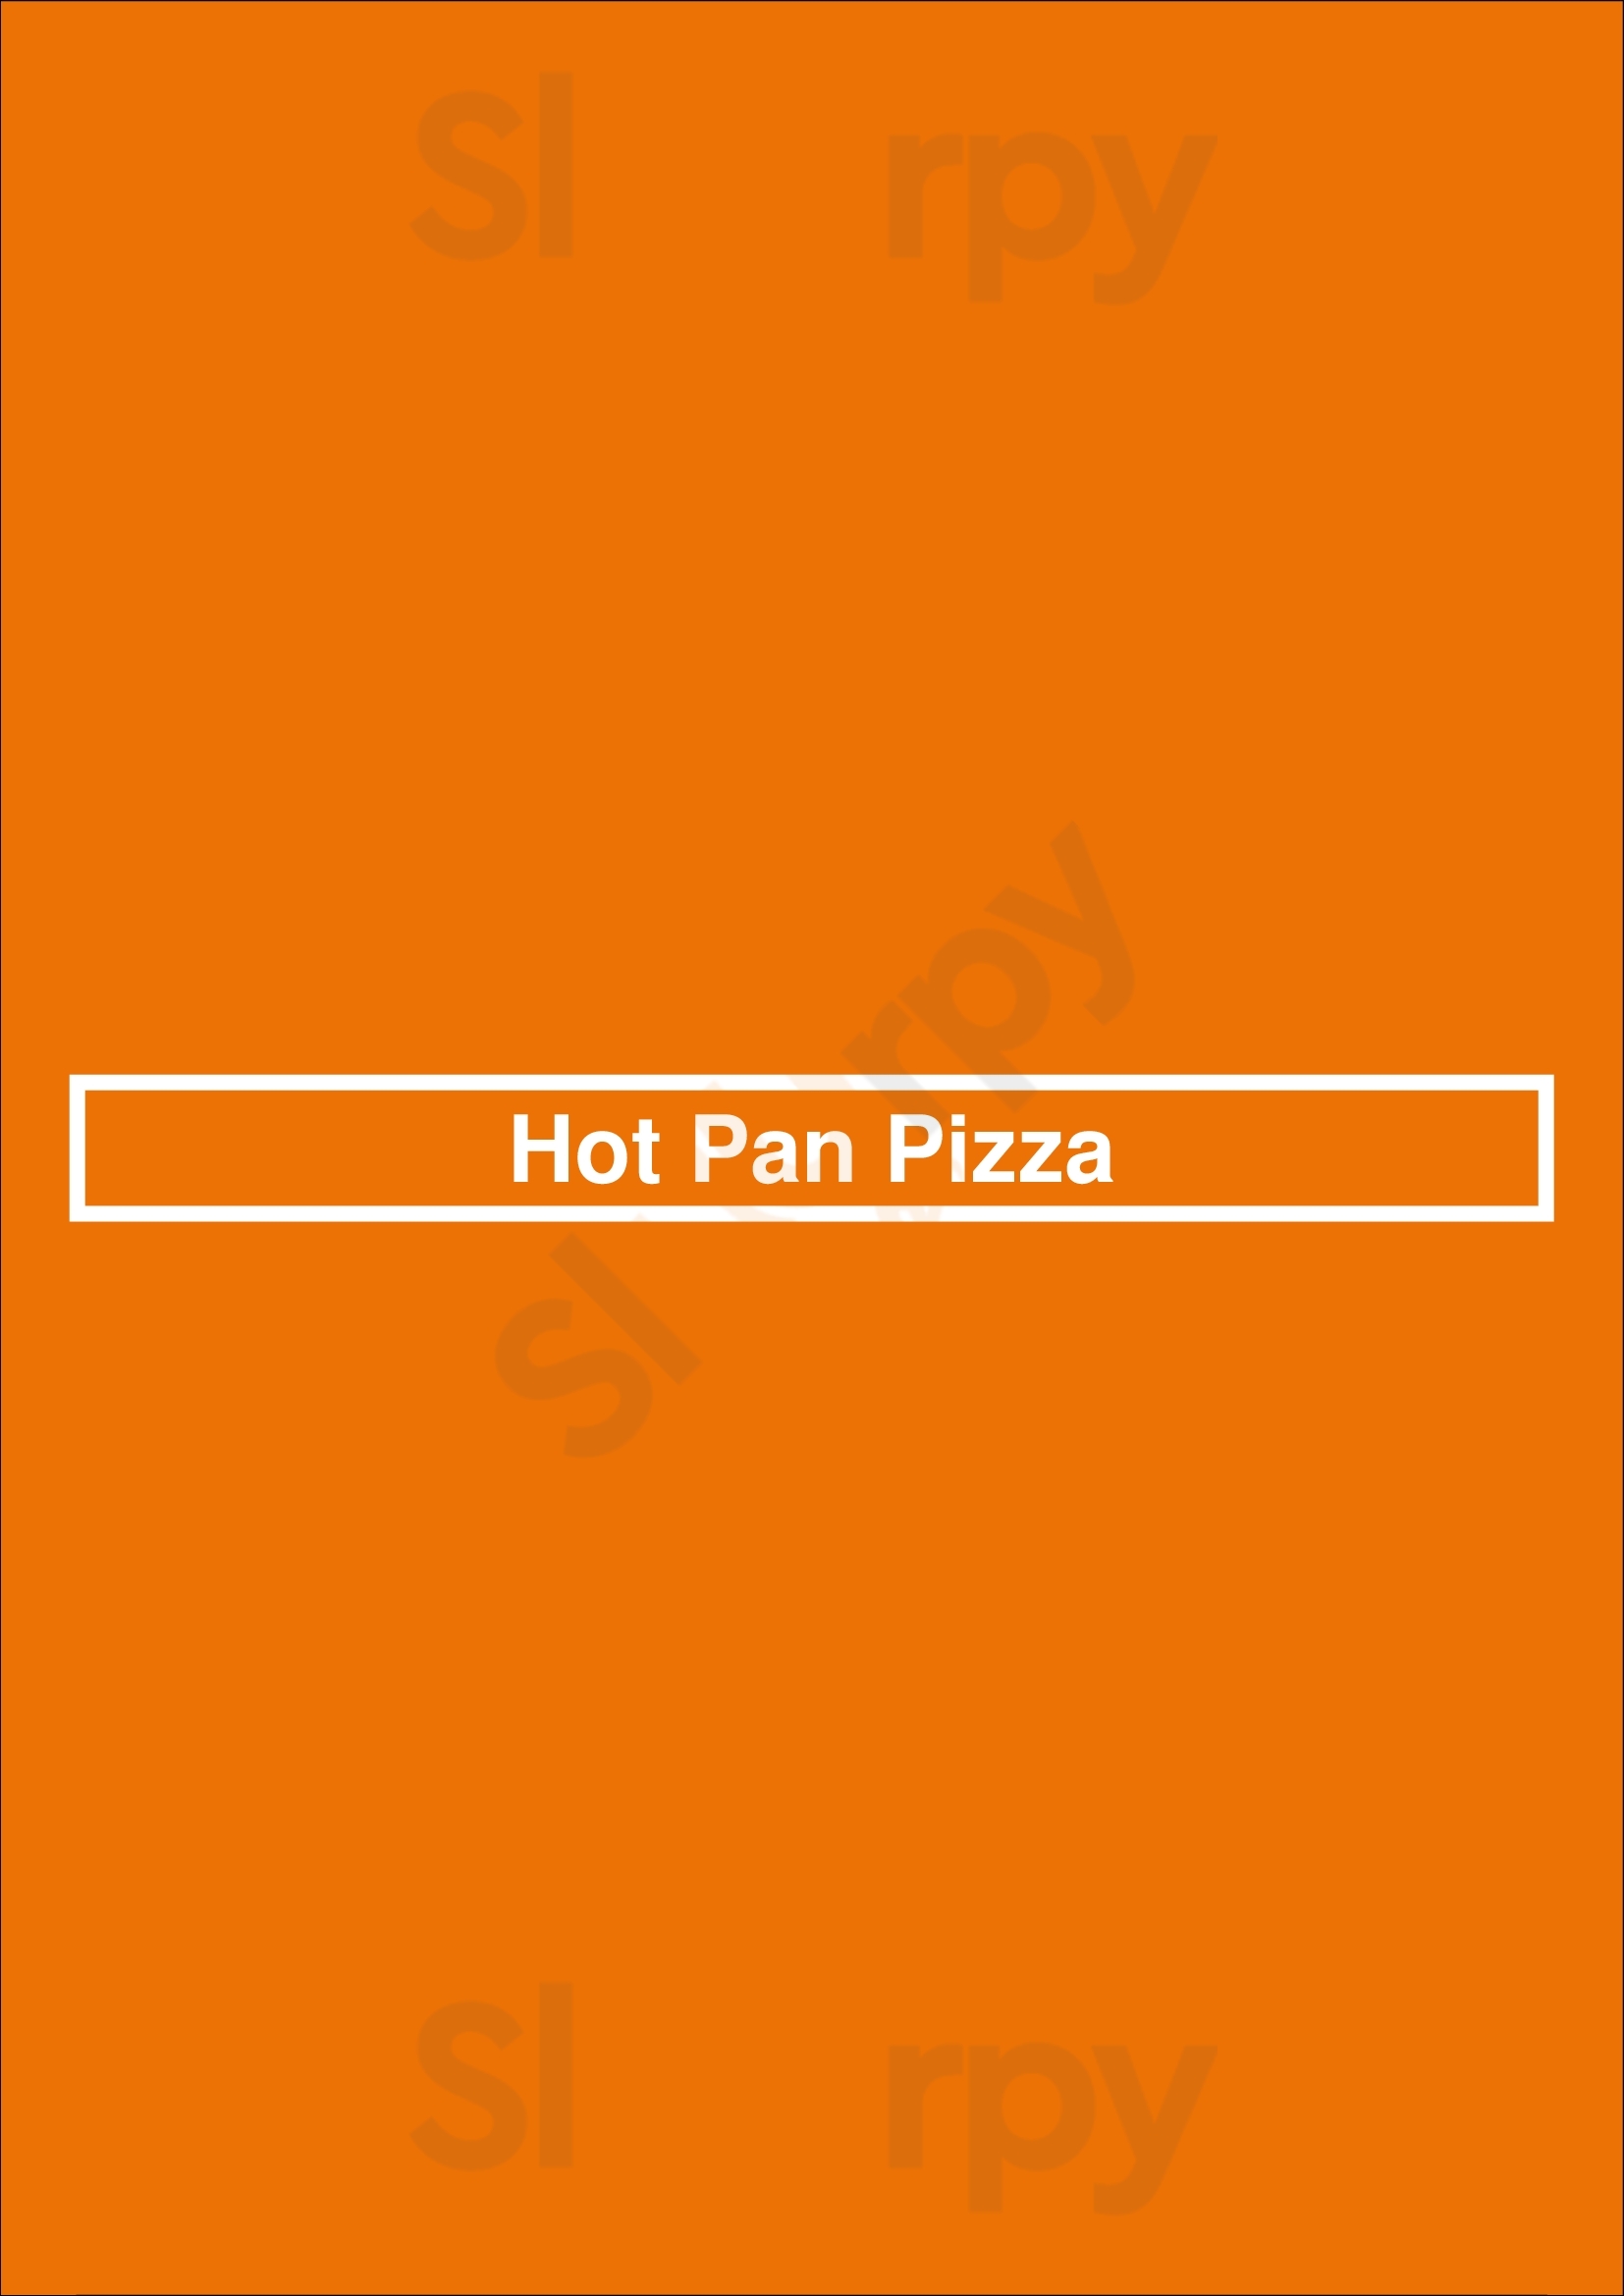 Hot Pan Pizza Surrey Menu - 1